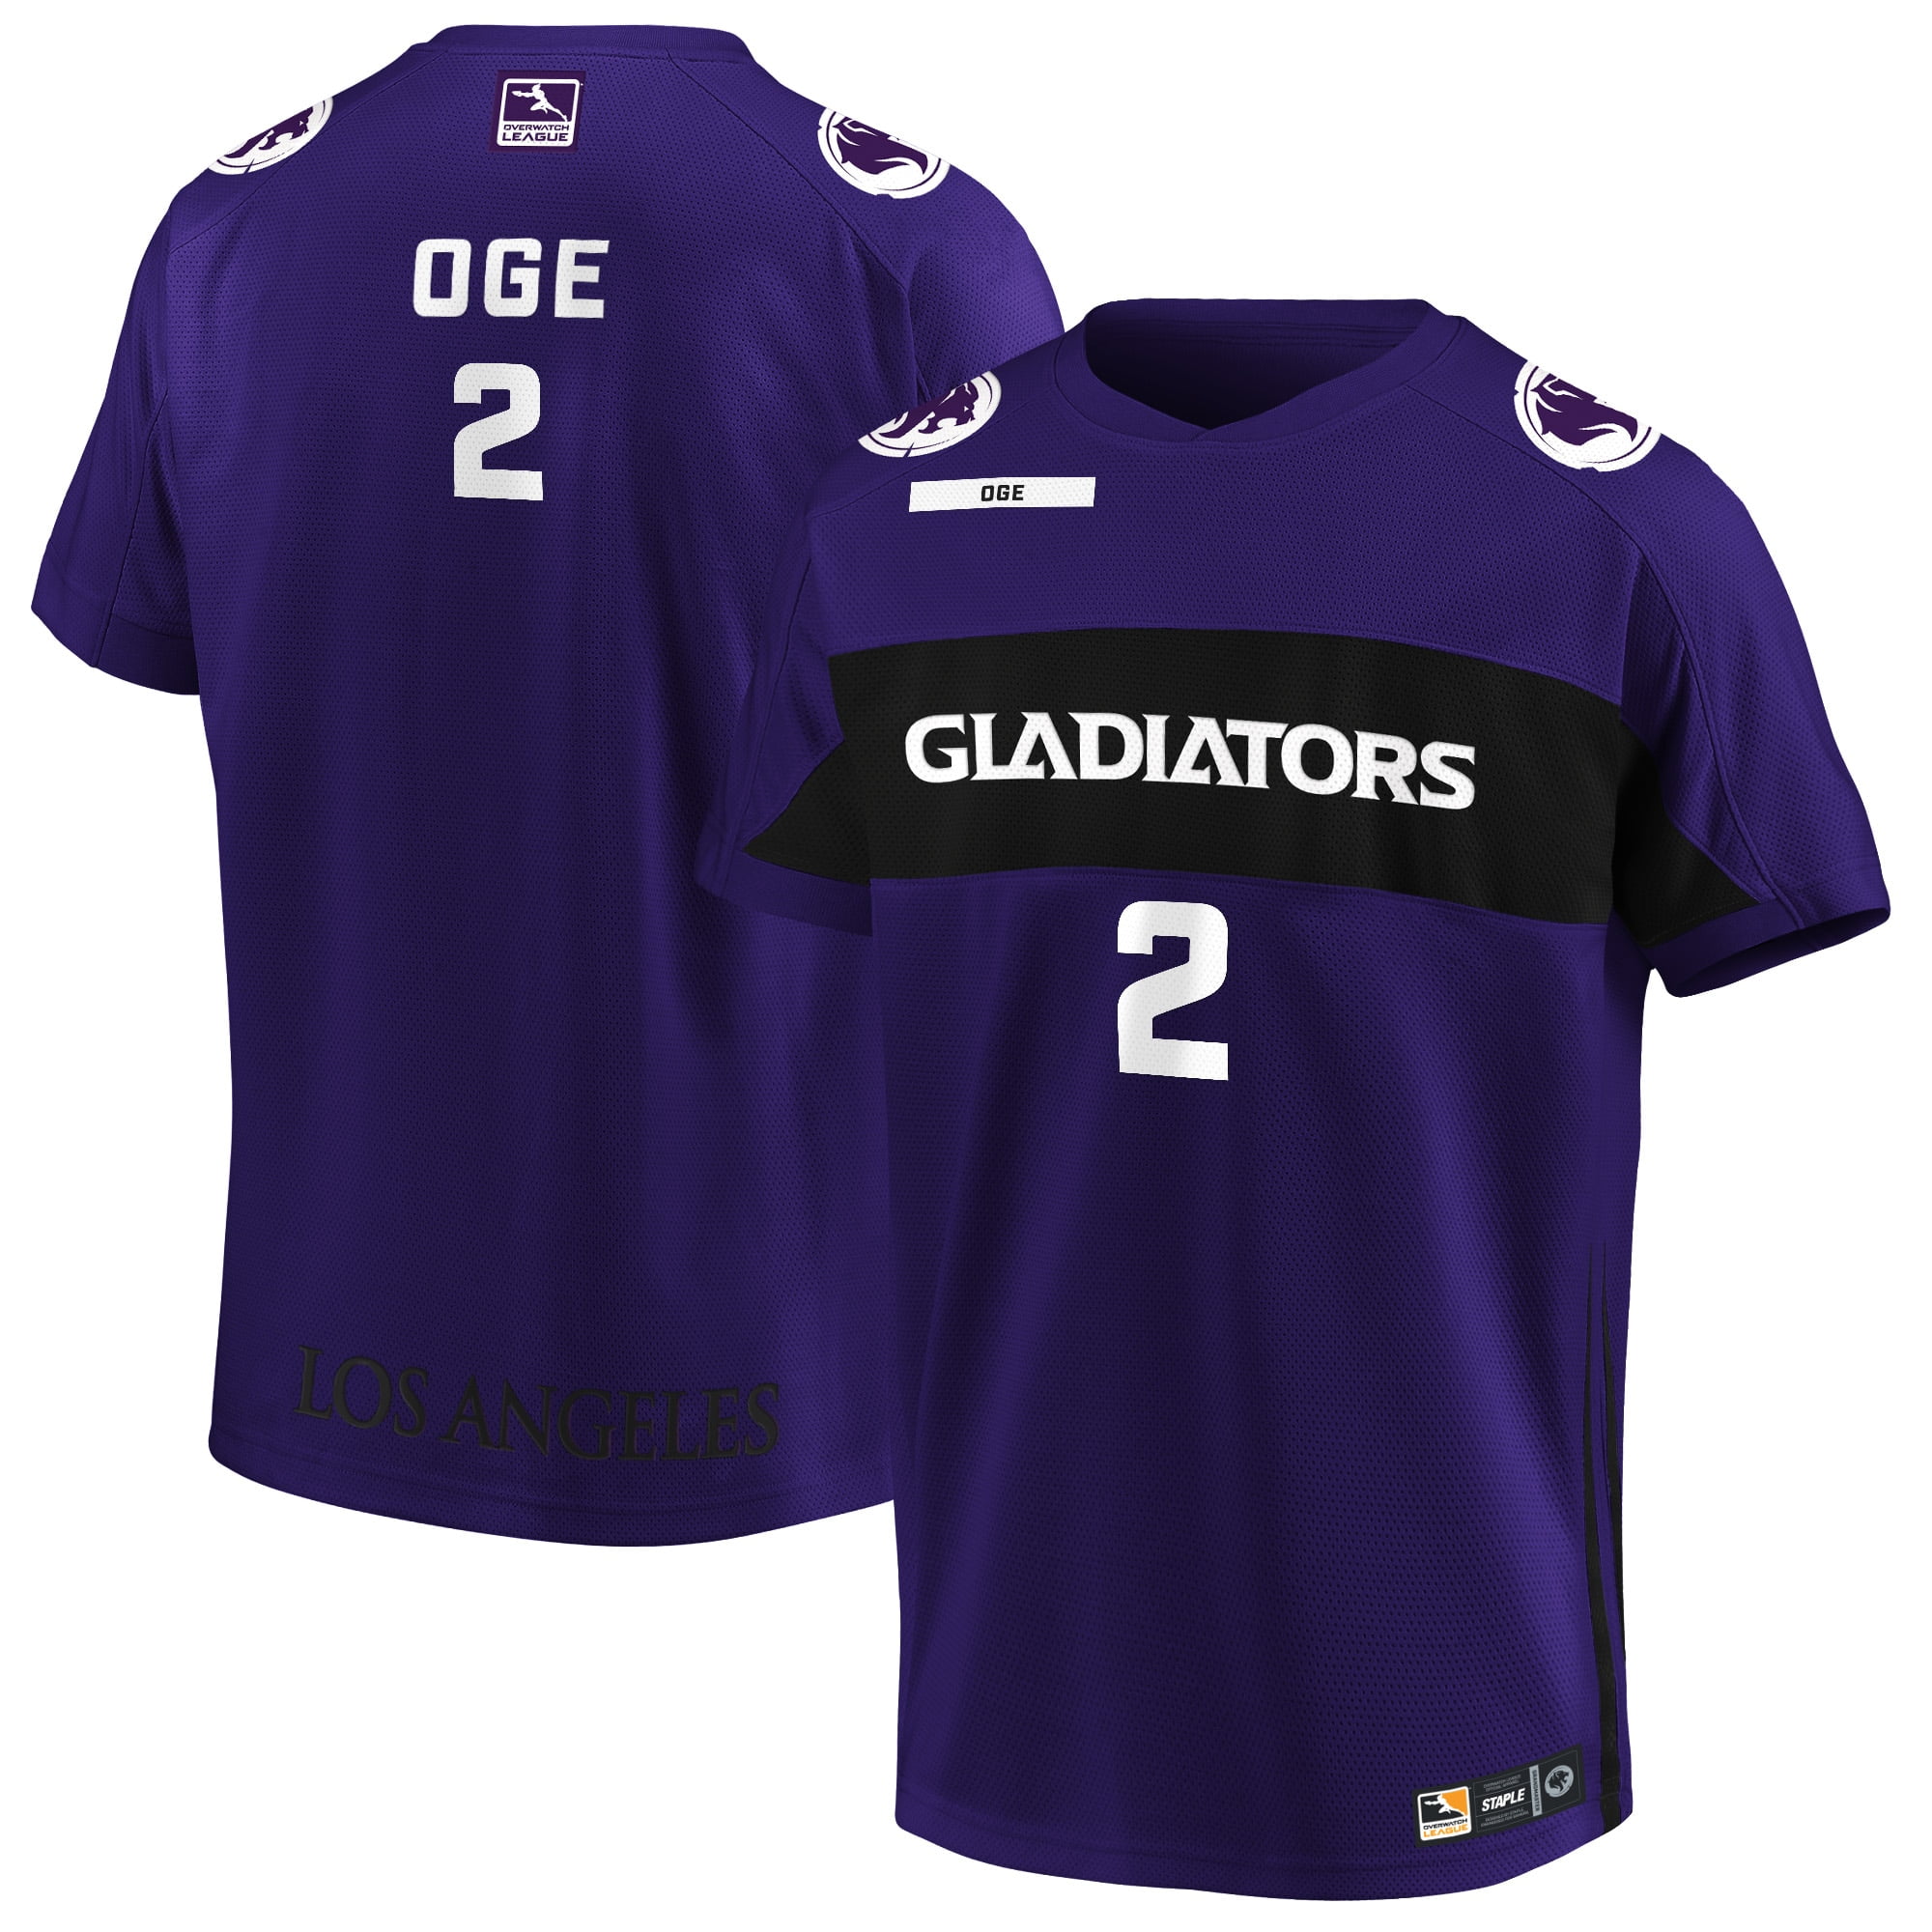 gladiators jersey